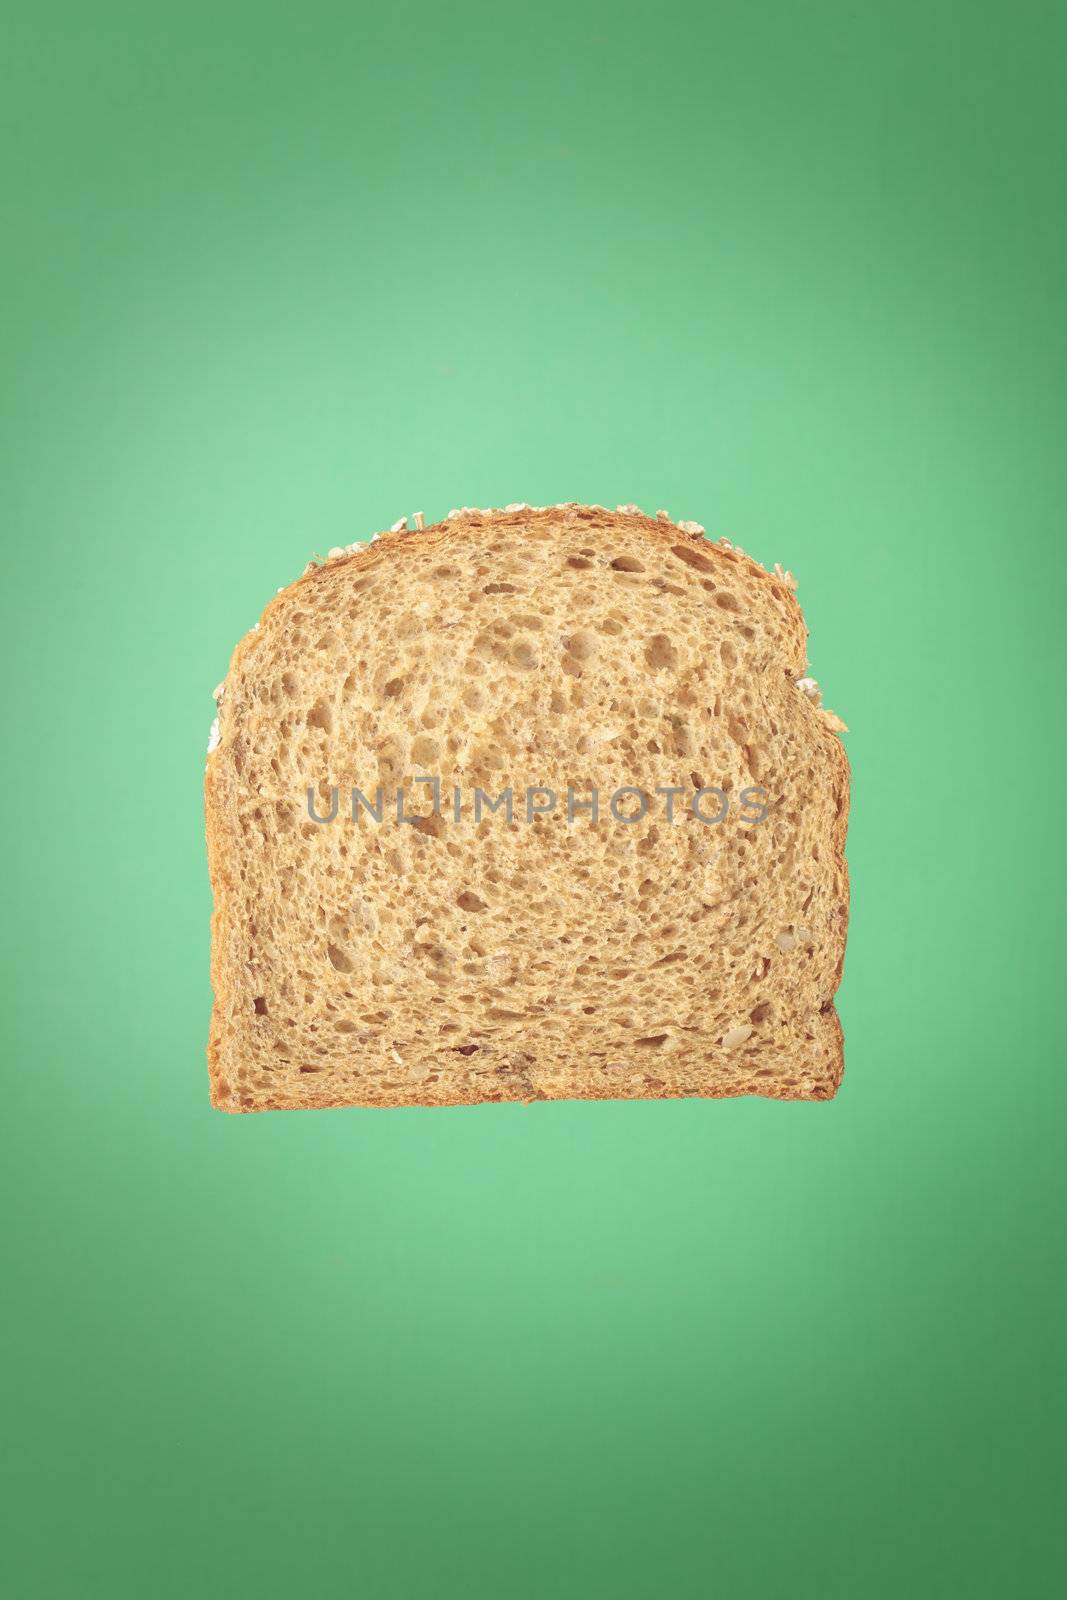 A Slice of wheat toast bread